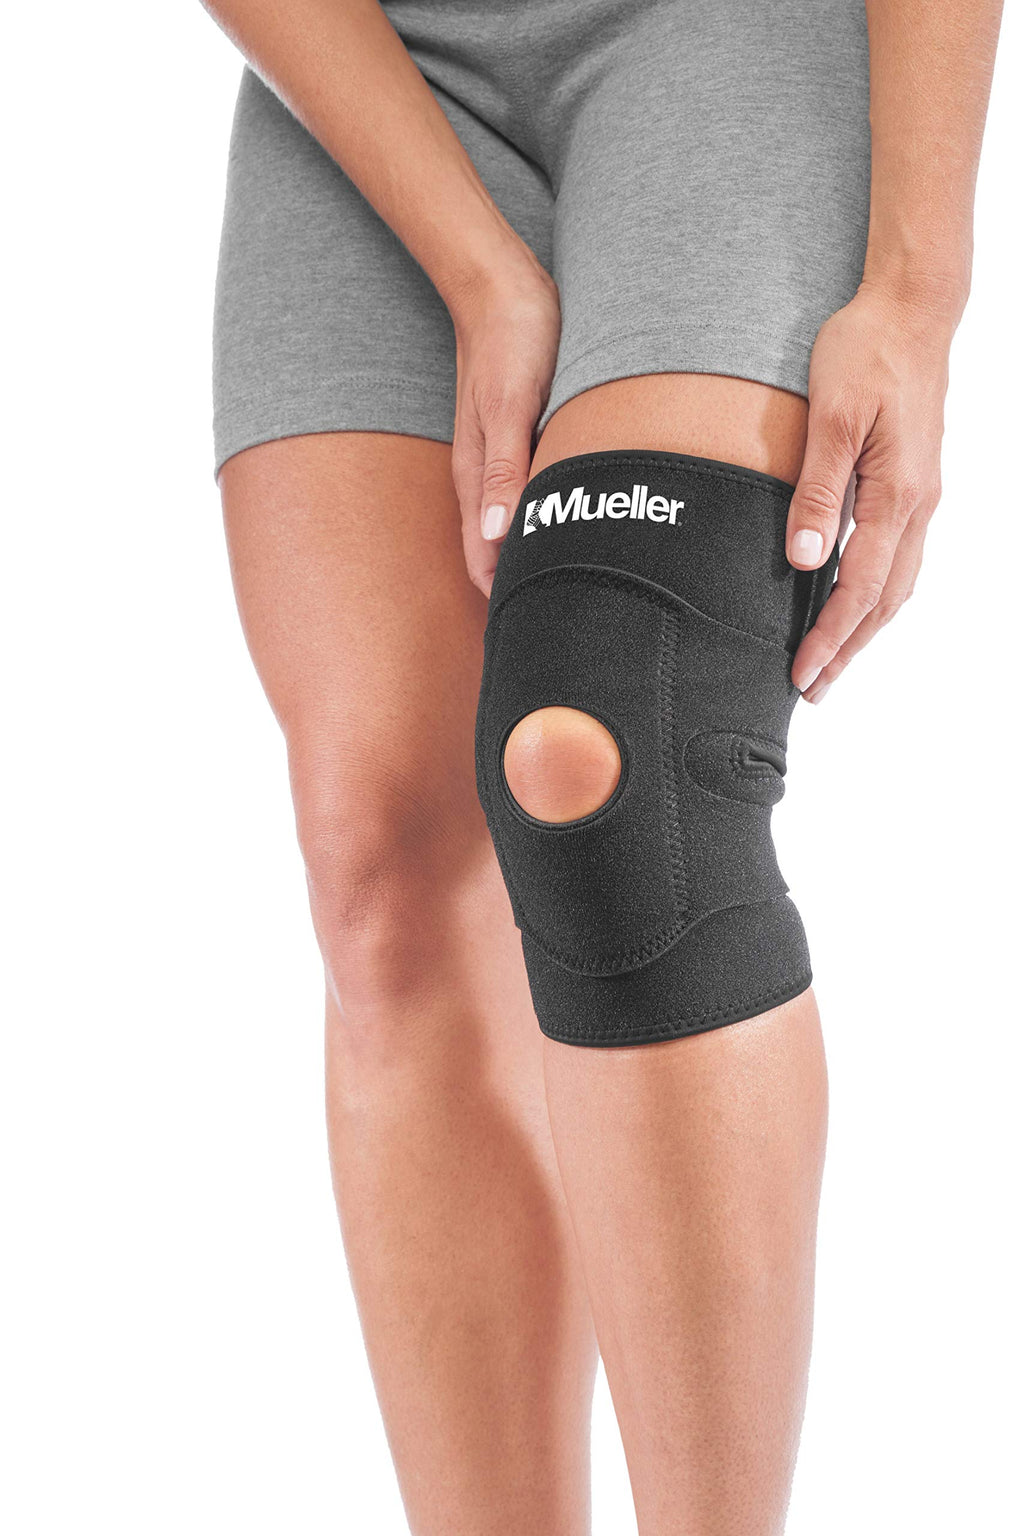 [Australia] - Mueller Adjustable Knee Support, Black, One Size | Adjustable Knee Brace Fits knee circumference up to 20 in (50 cm) 